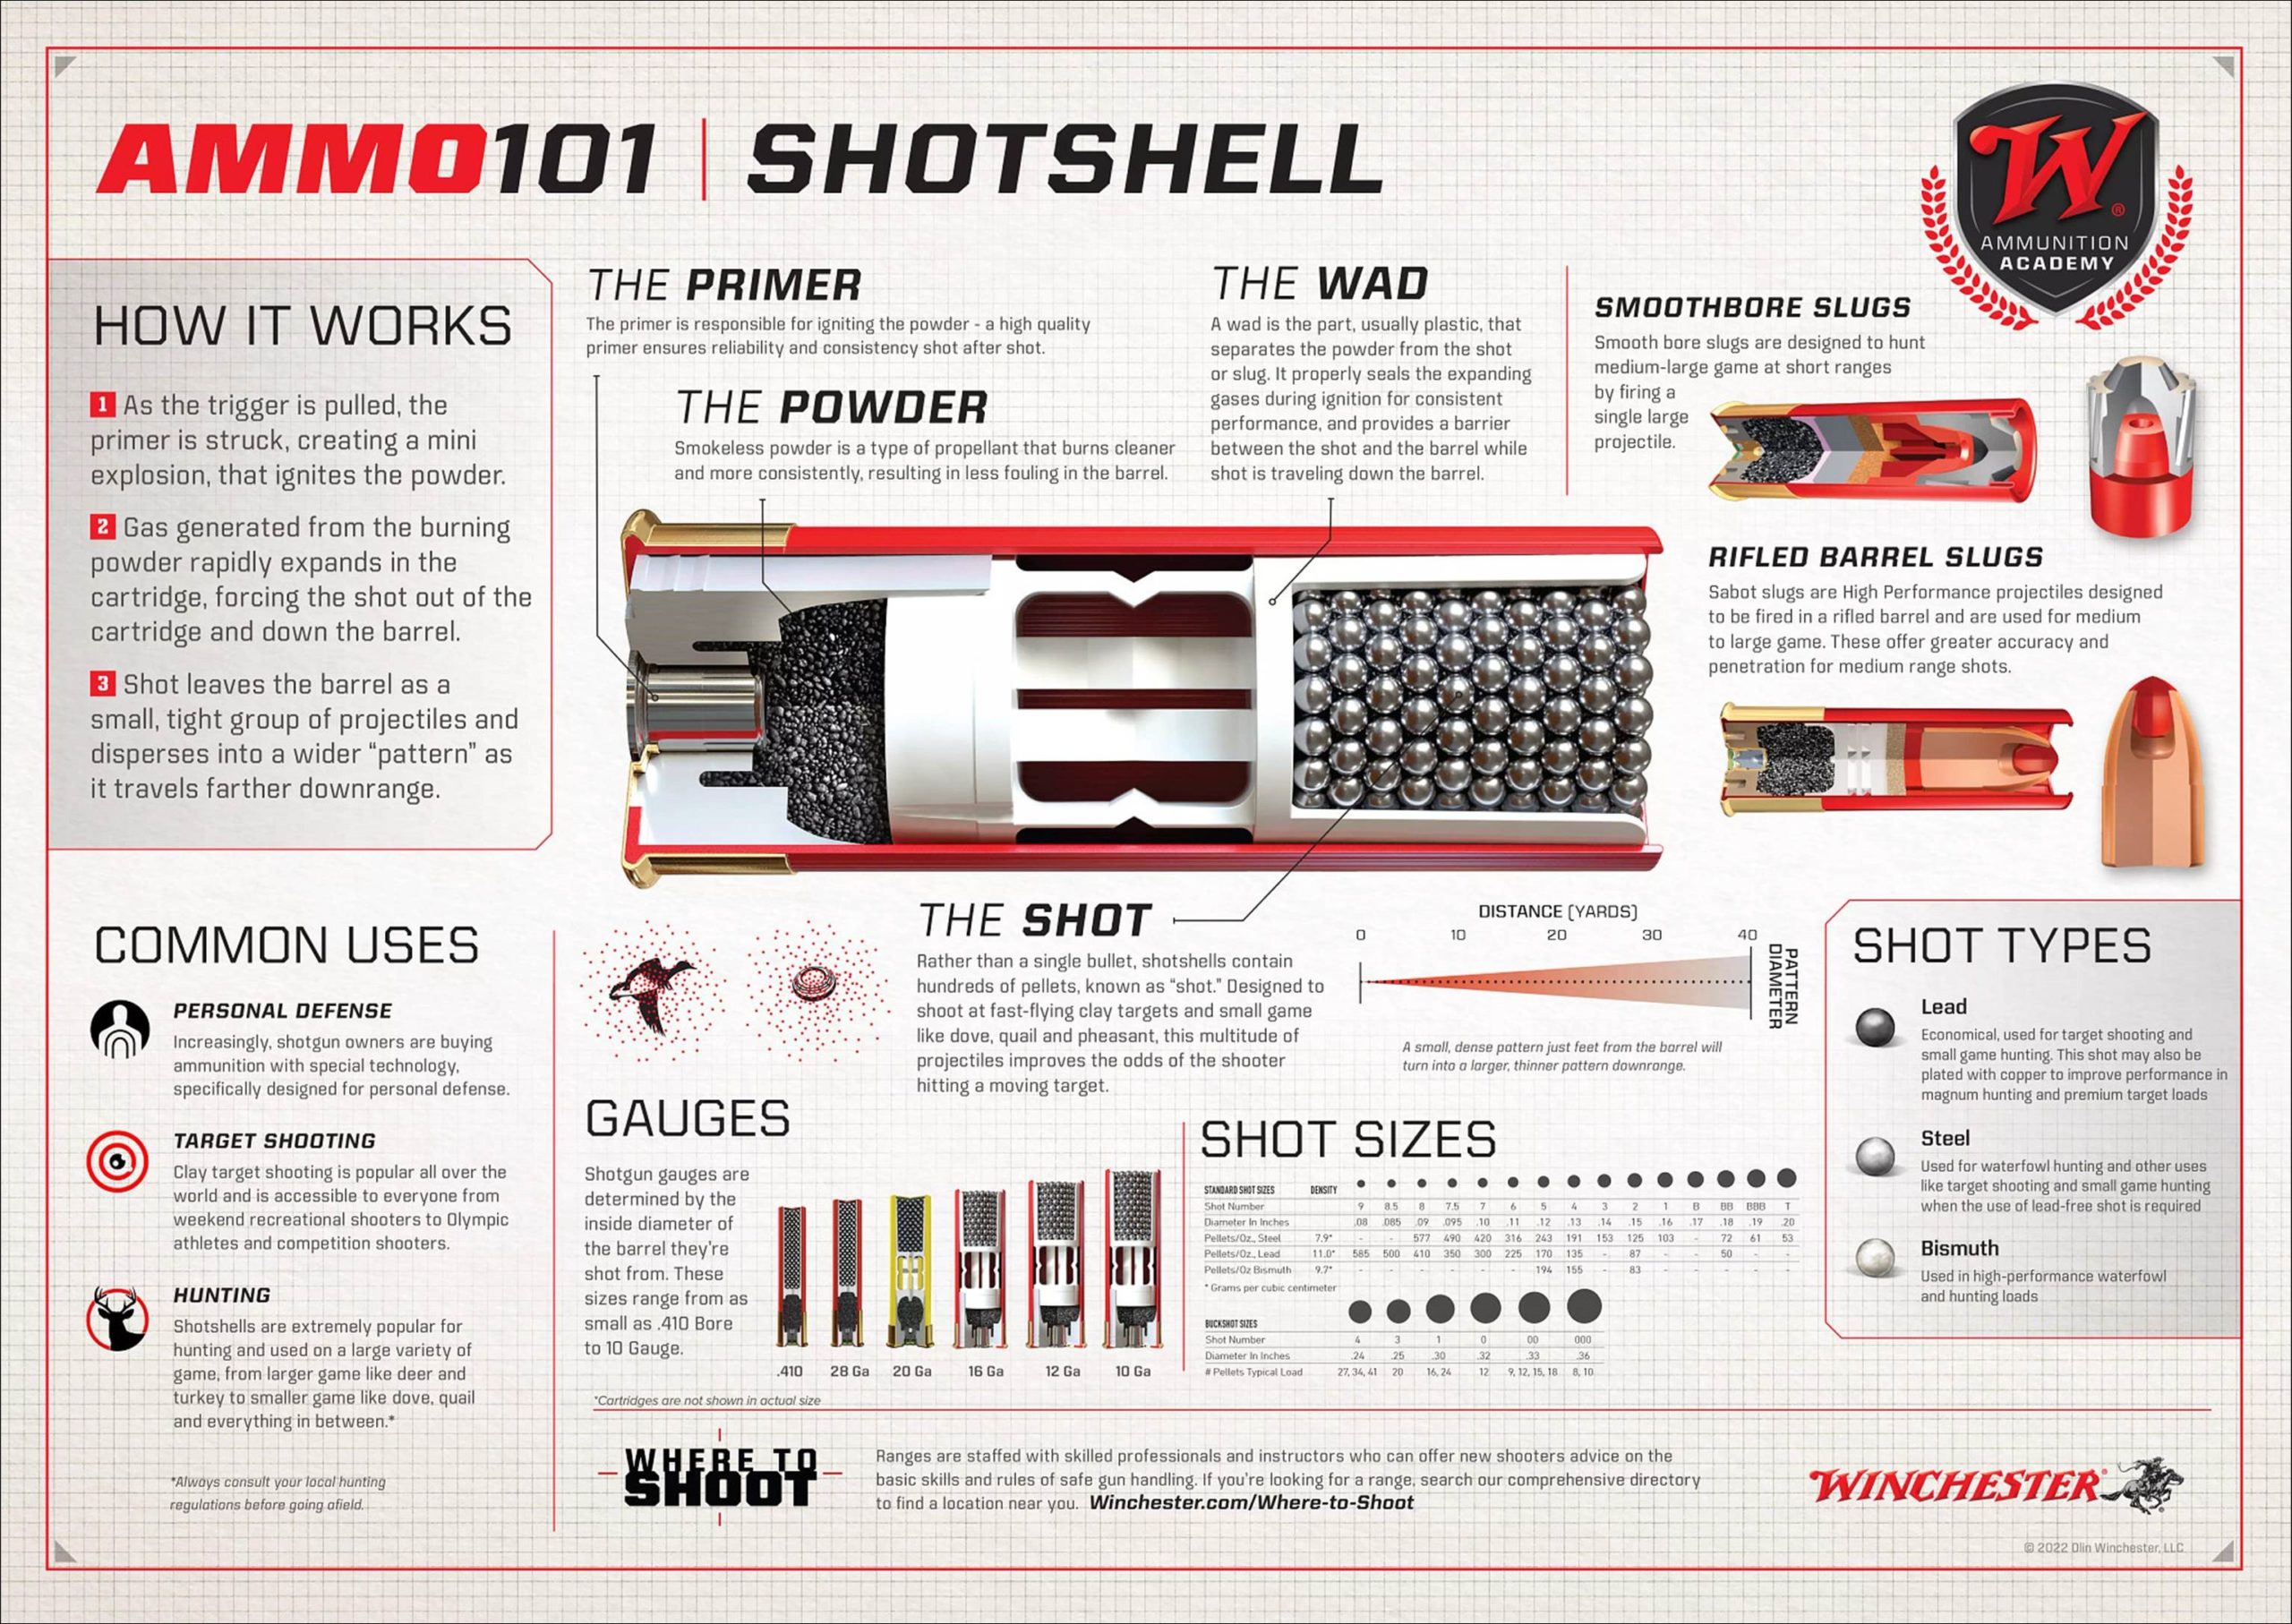 Image of the inner working of shotshell ammunition